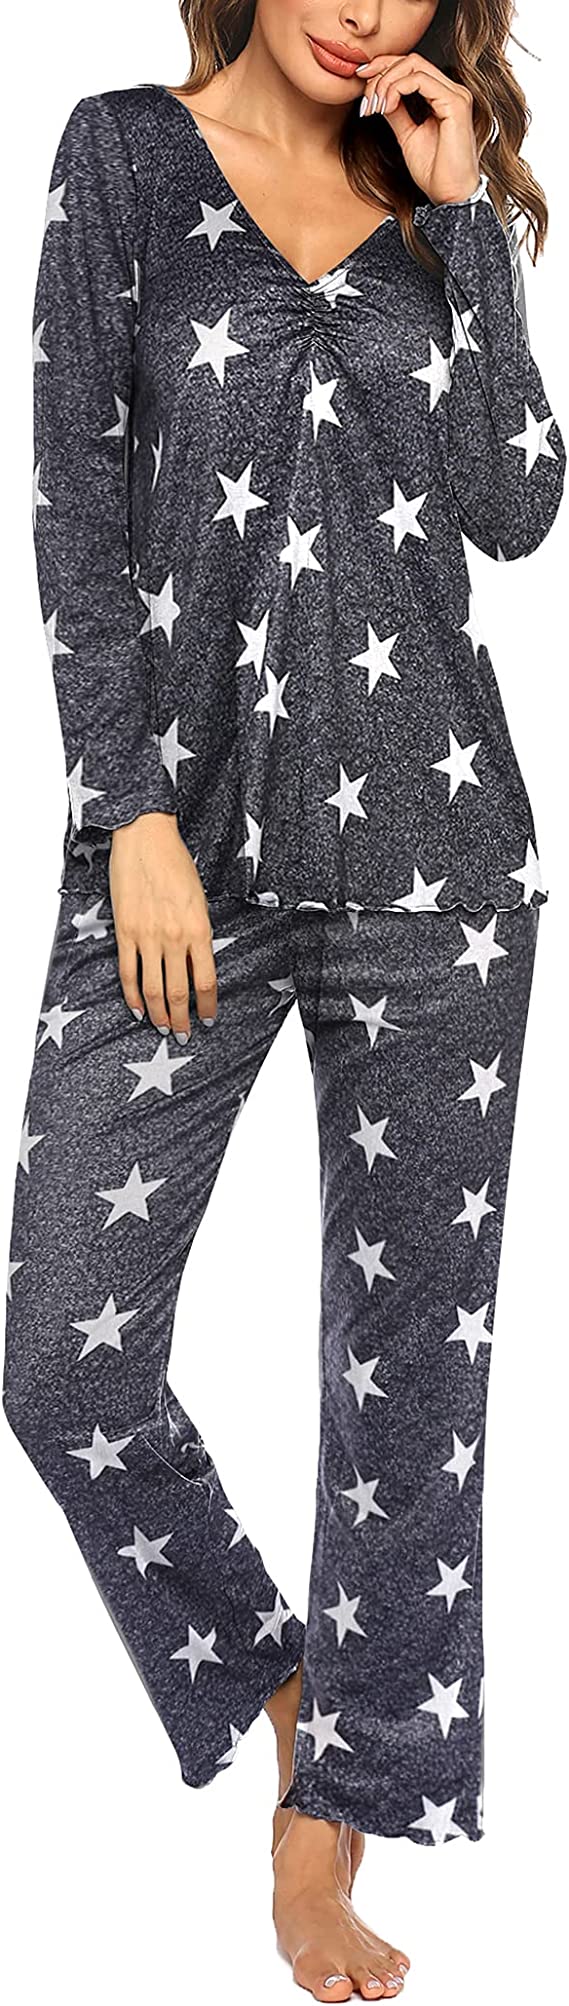 MAXMODA Womens Pyjamas Set Pj Set Long Sleeve Tops and Full Length Pyjama Pants Sleepwear Set